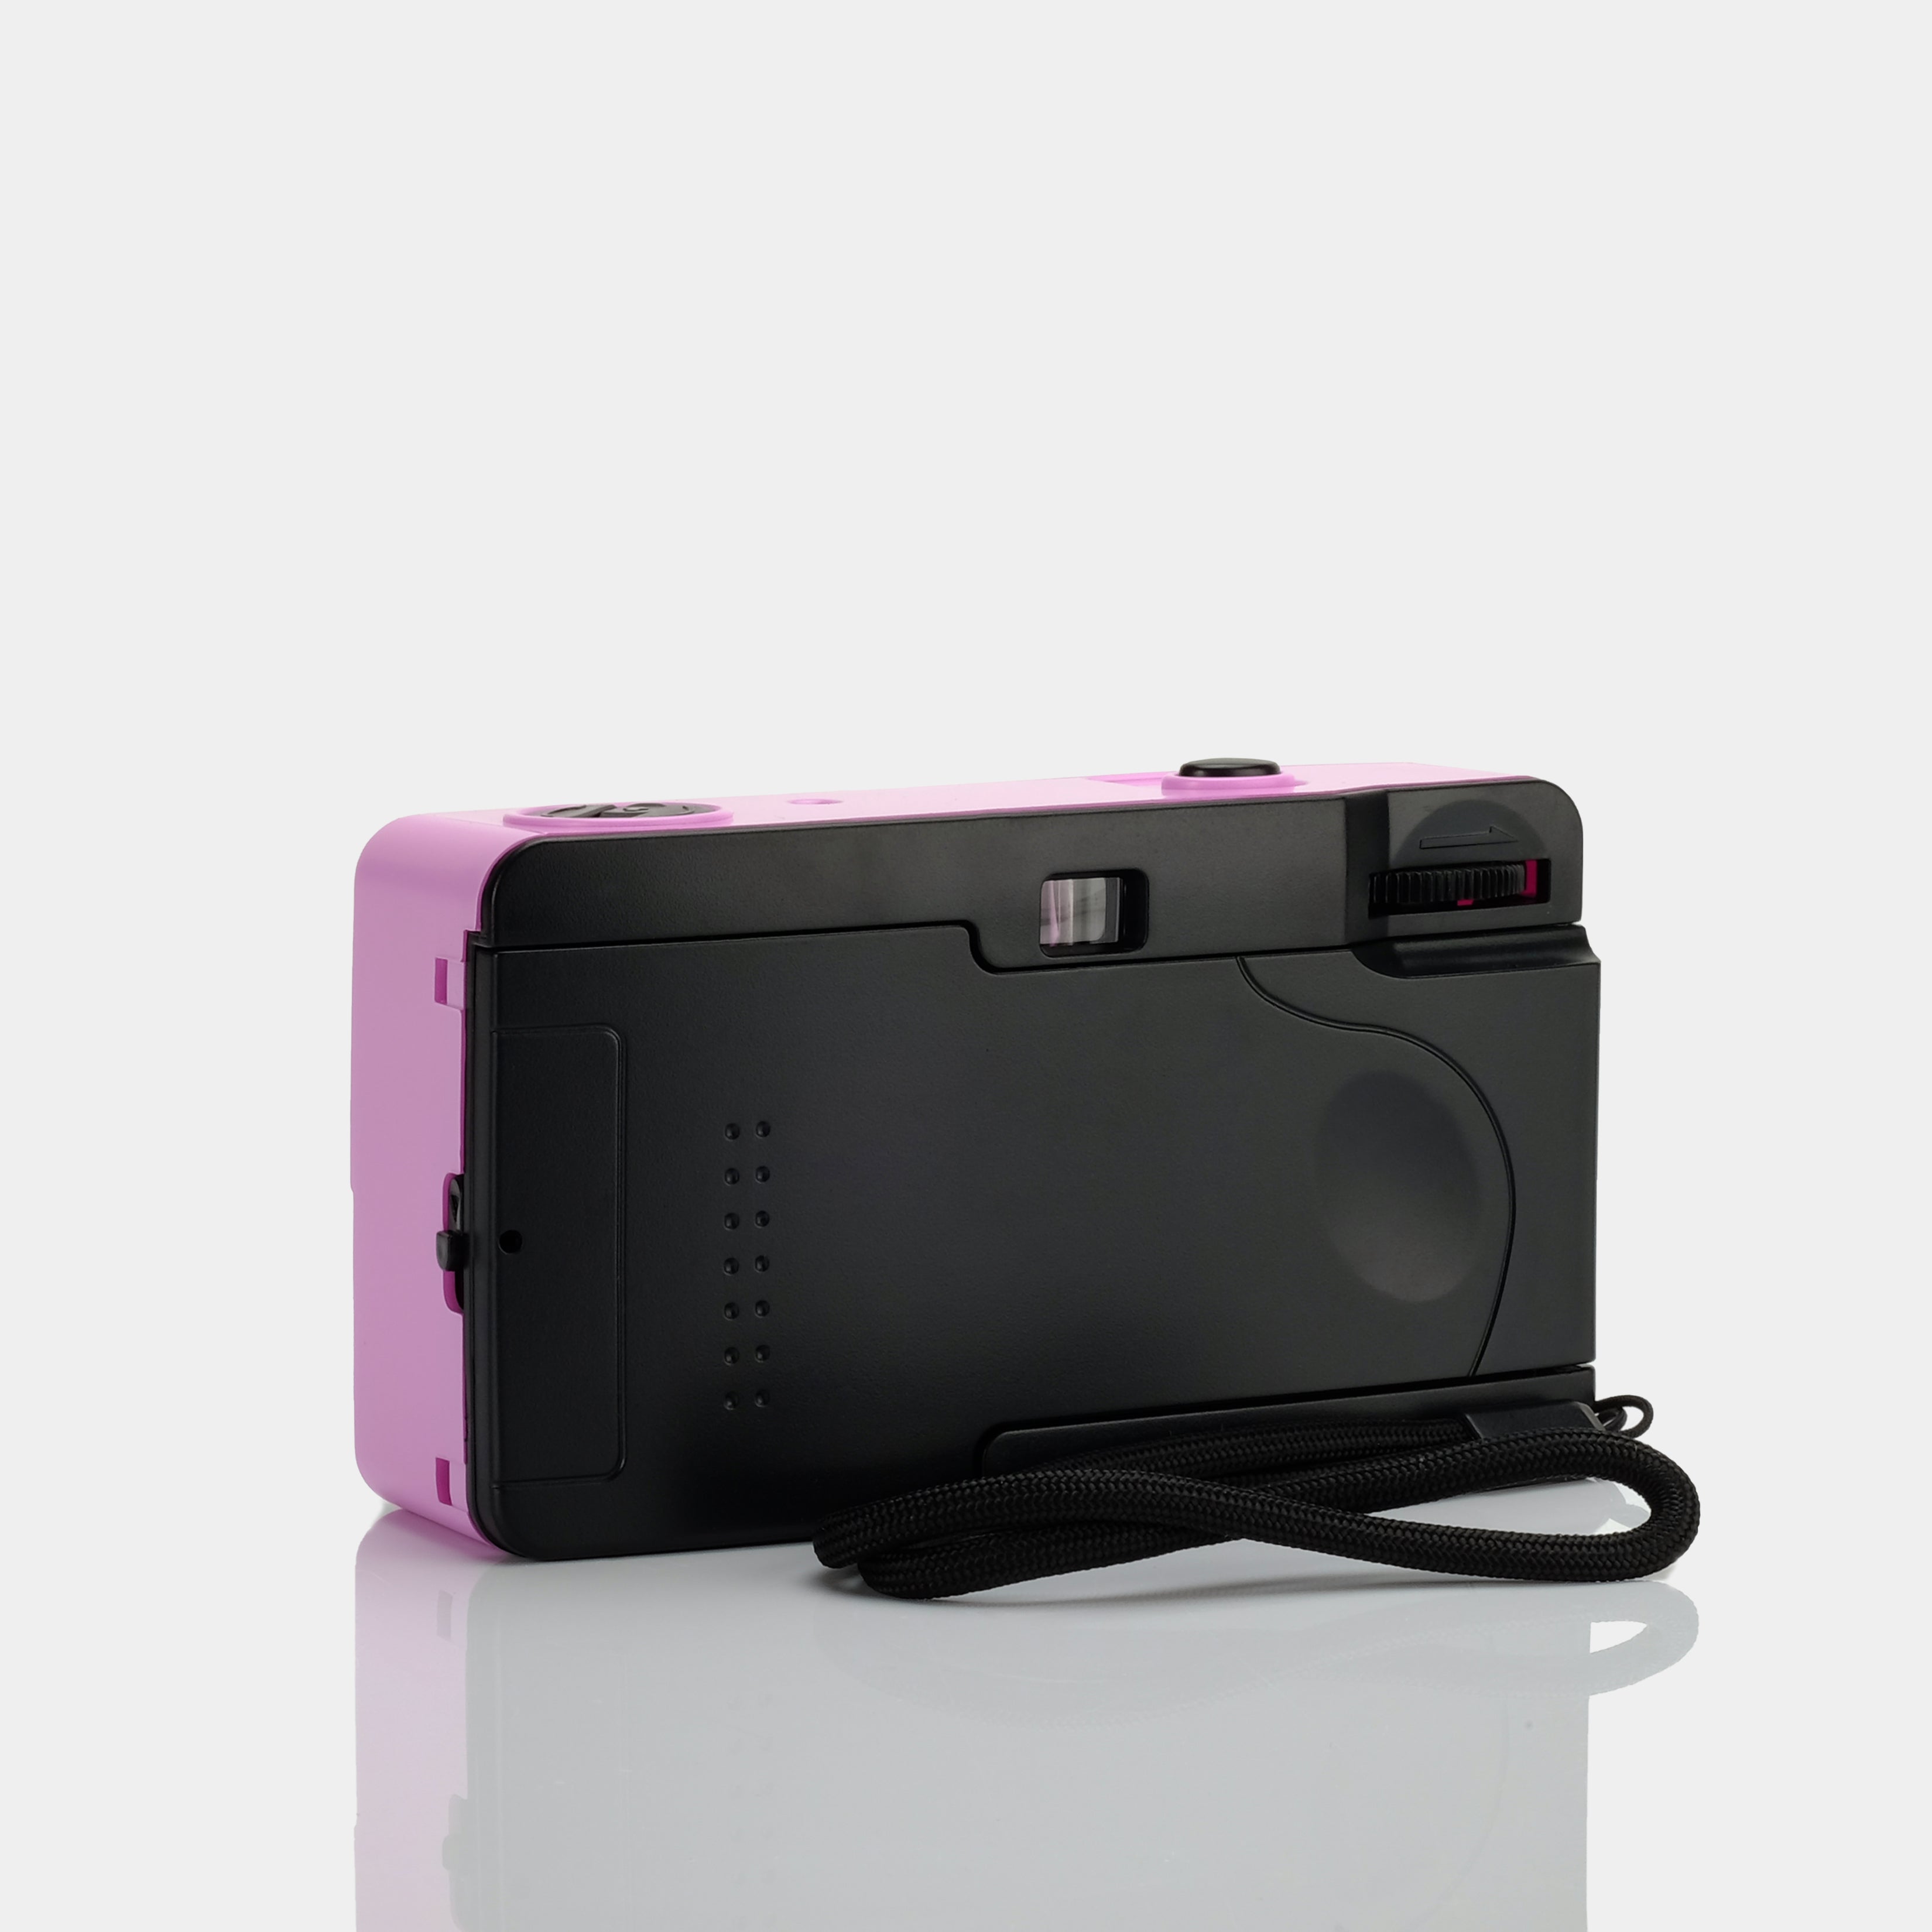 Kodak M35 Reusable 35mm Point and Shoot Purple Compact Film Camera